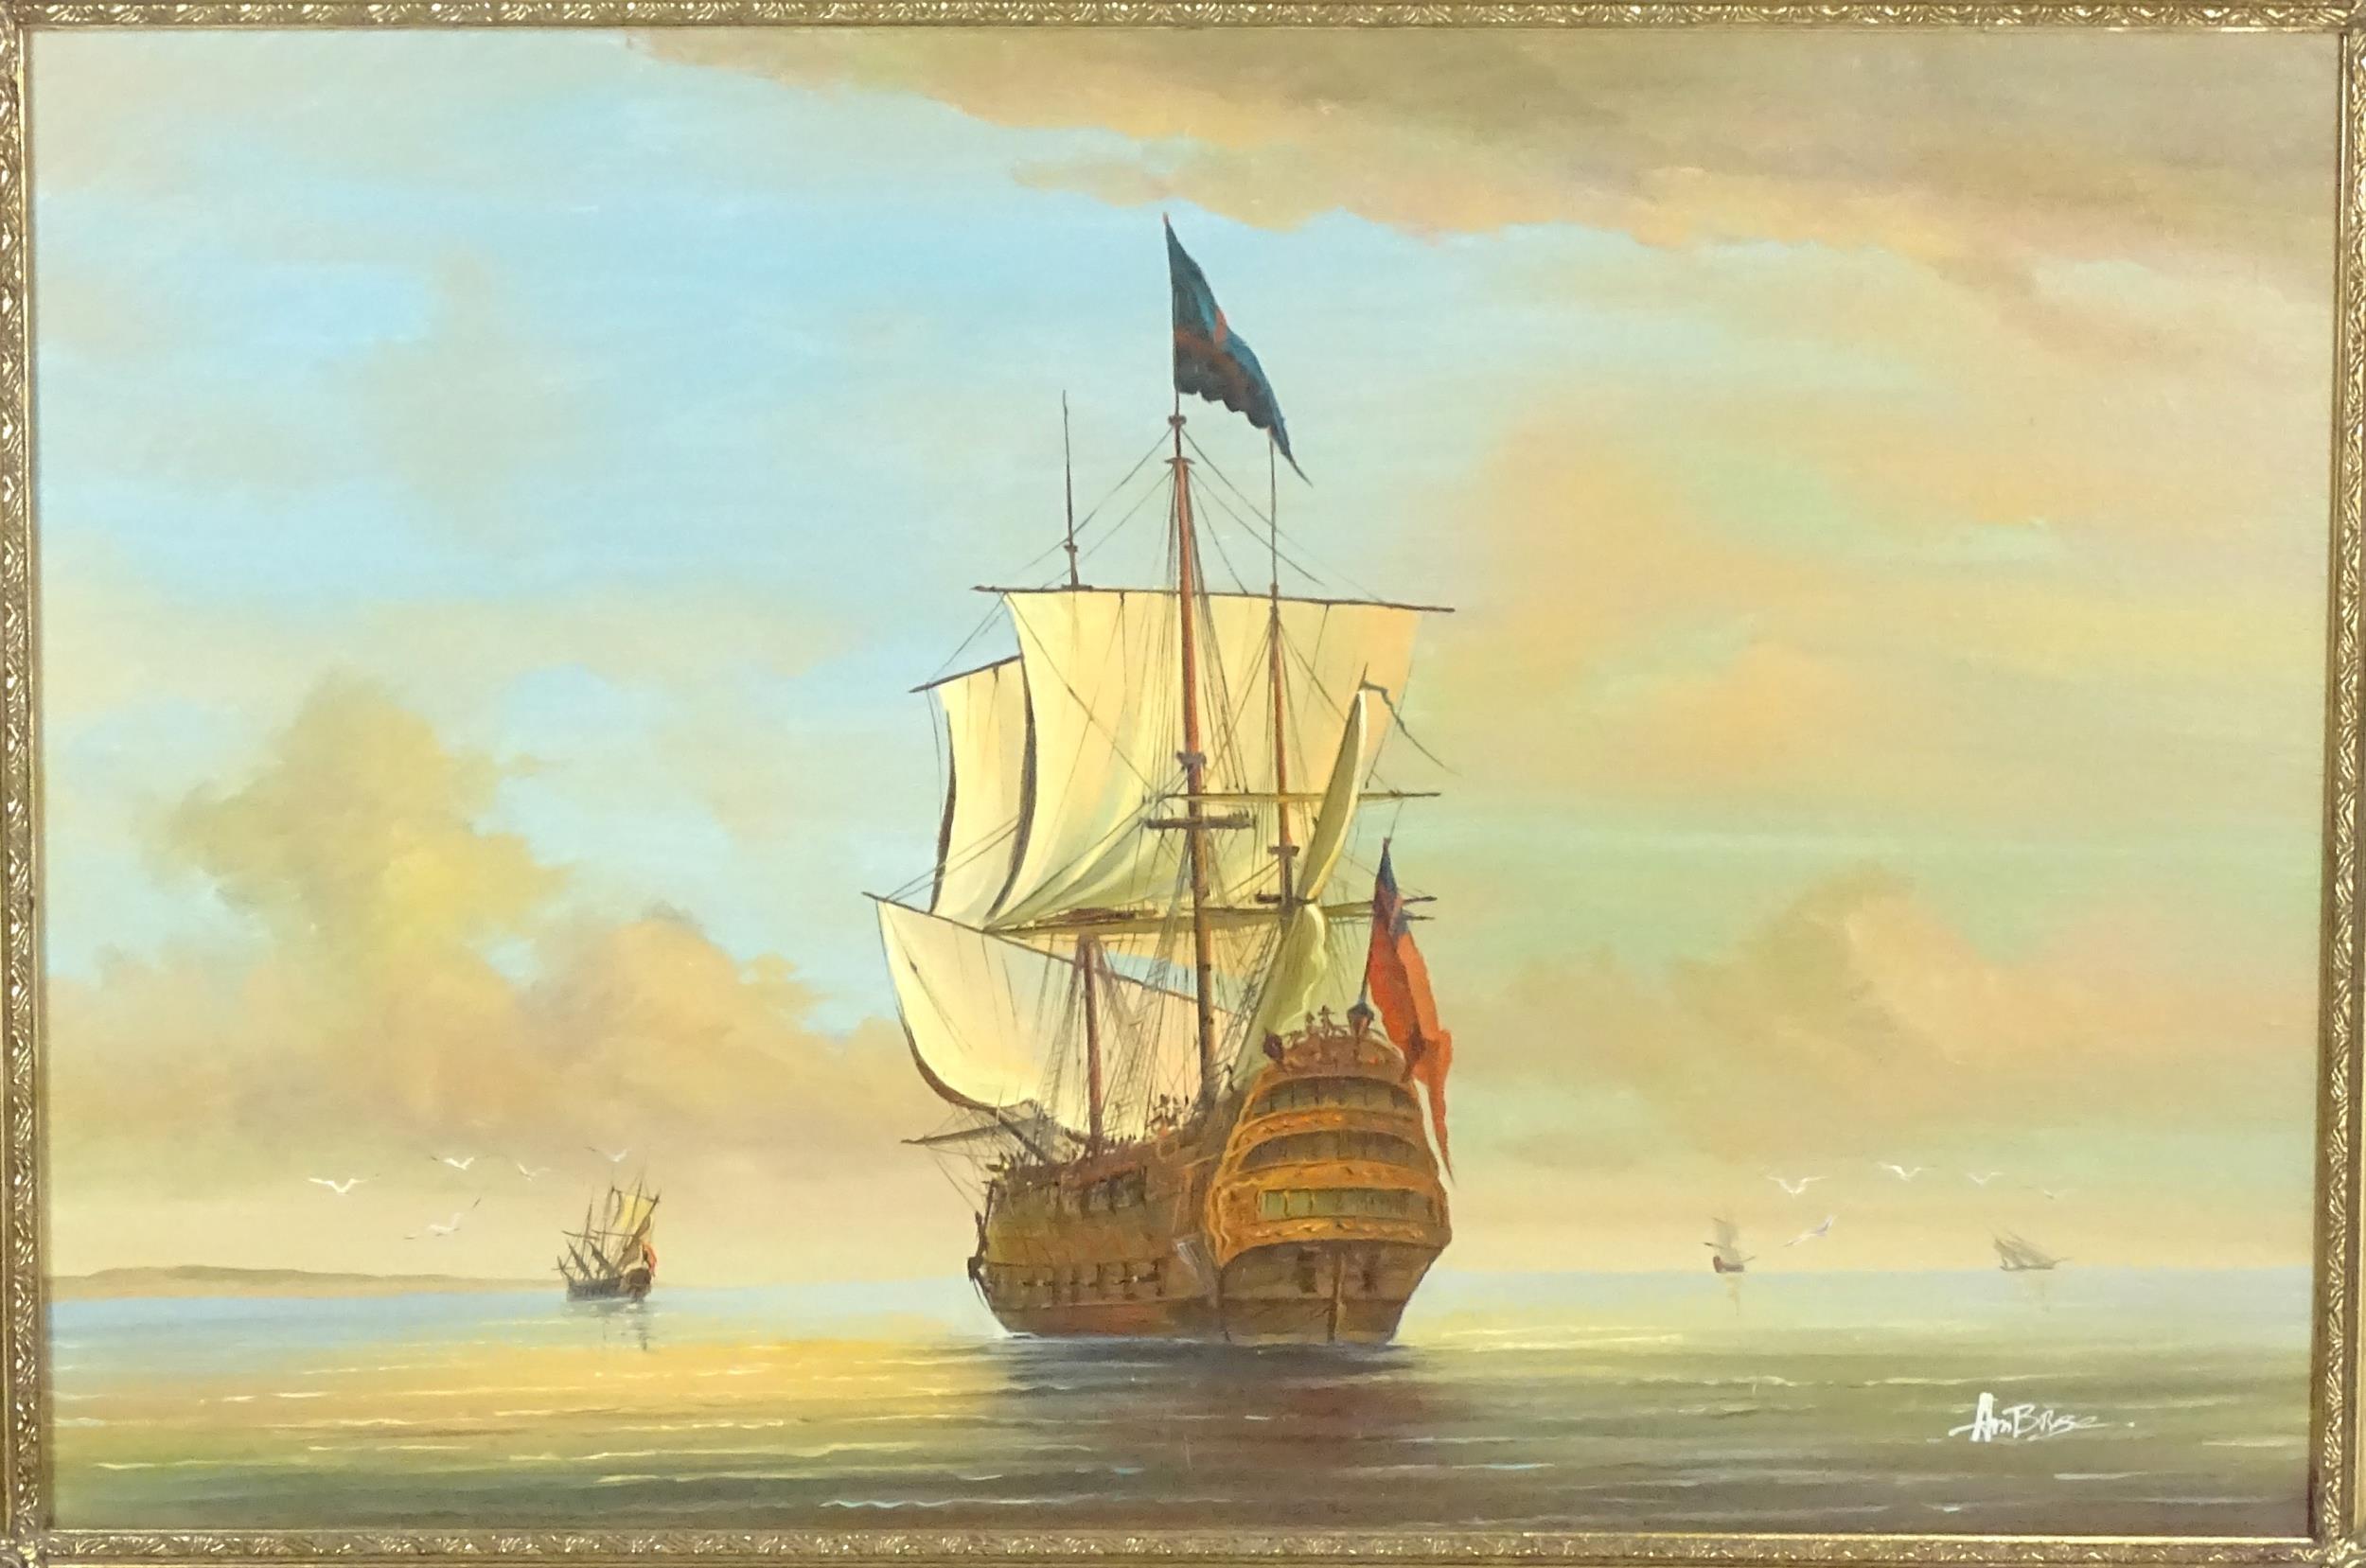 how big were napoleon's ships